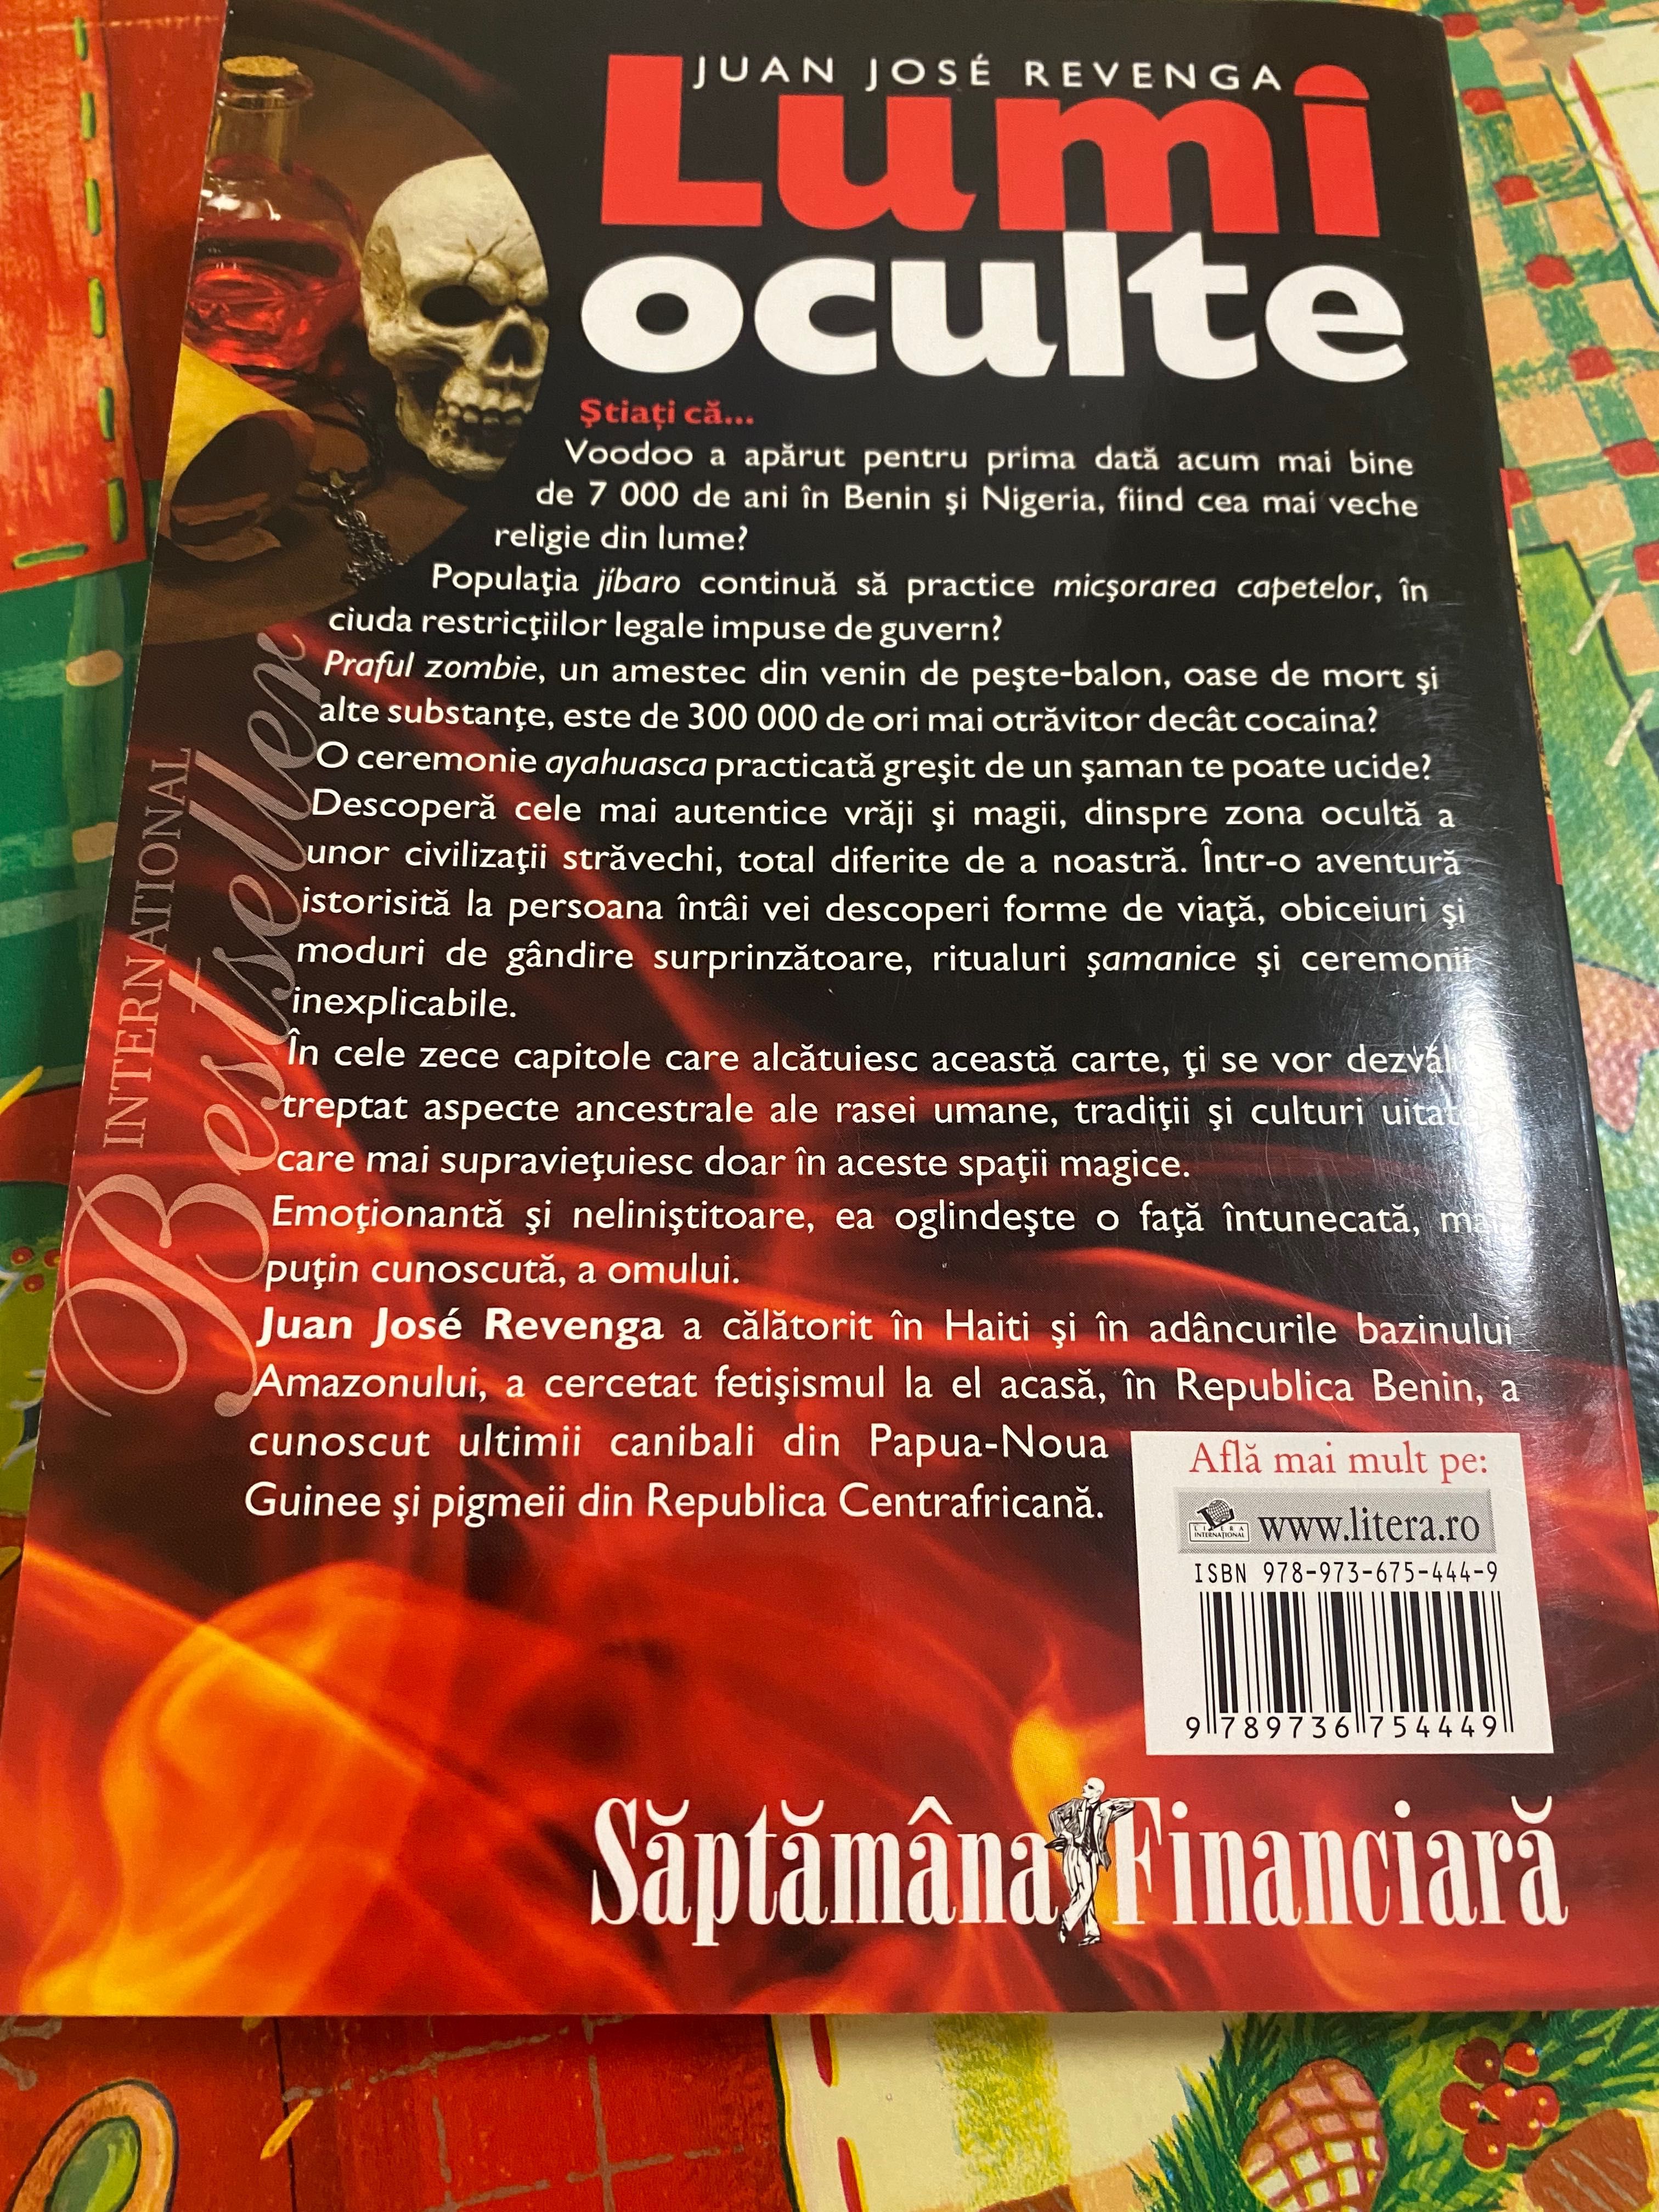 J.Jose Revenga-Lumi oculte-bestseller-Editura Litera